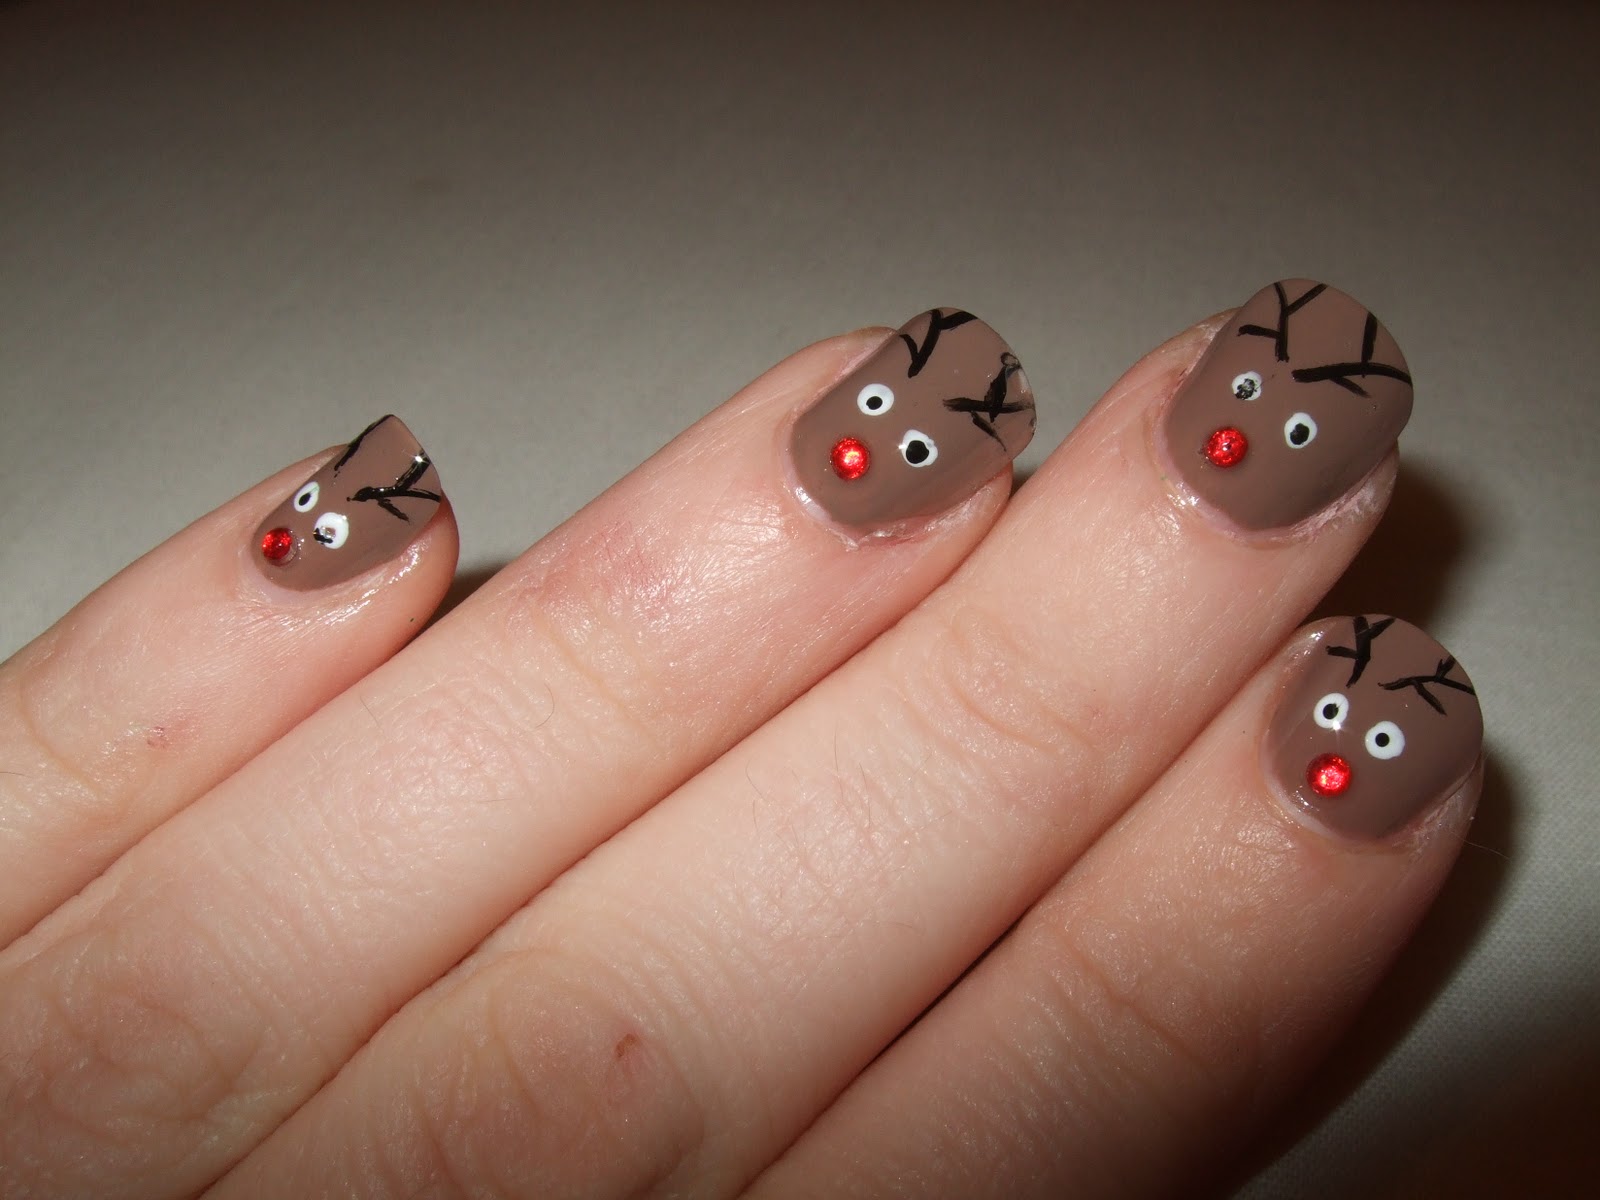 3. Reindeer Nail Art Design - wide 8